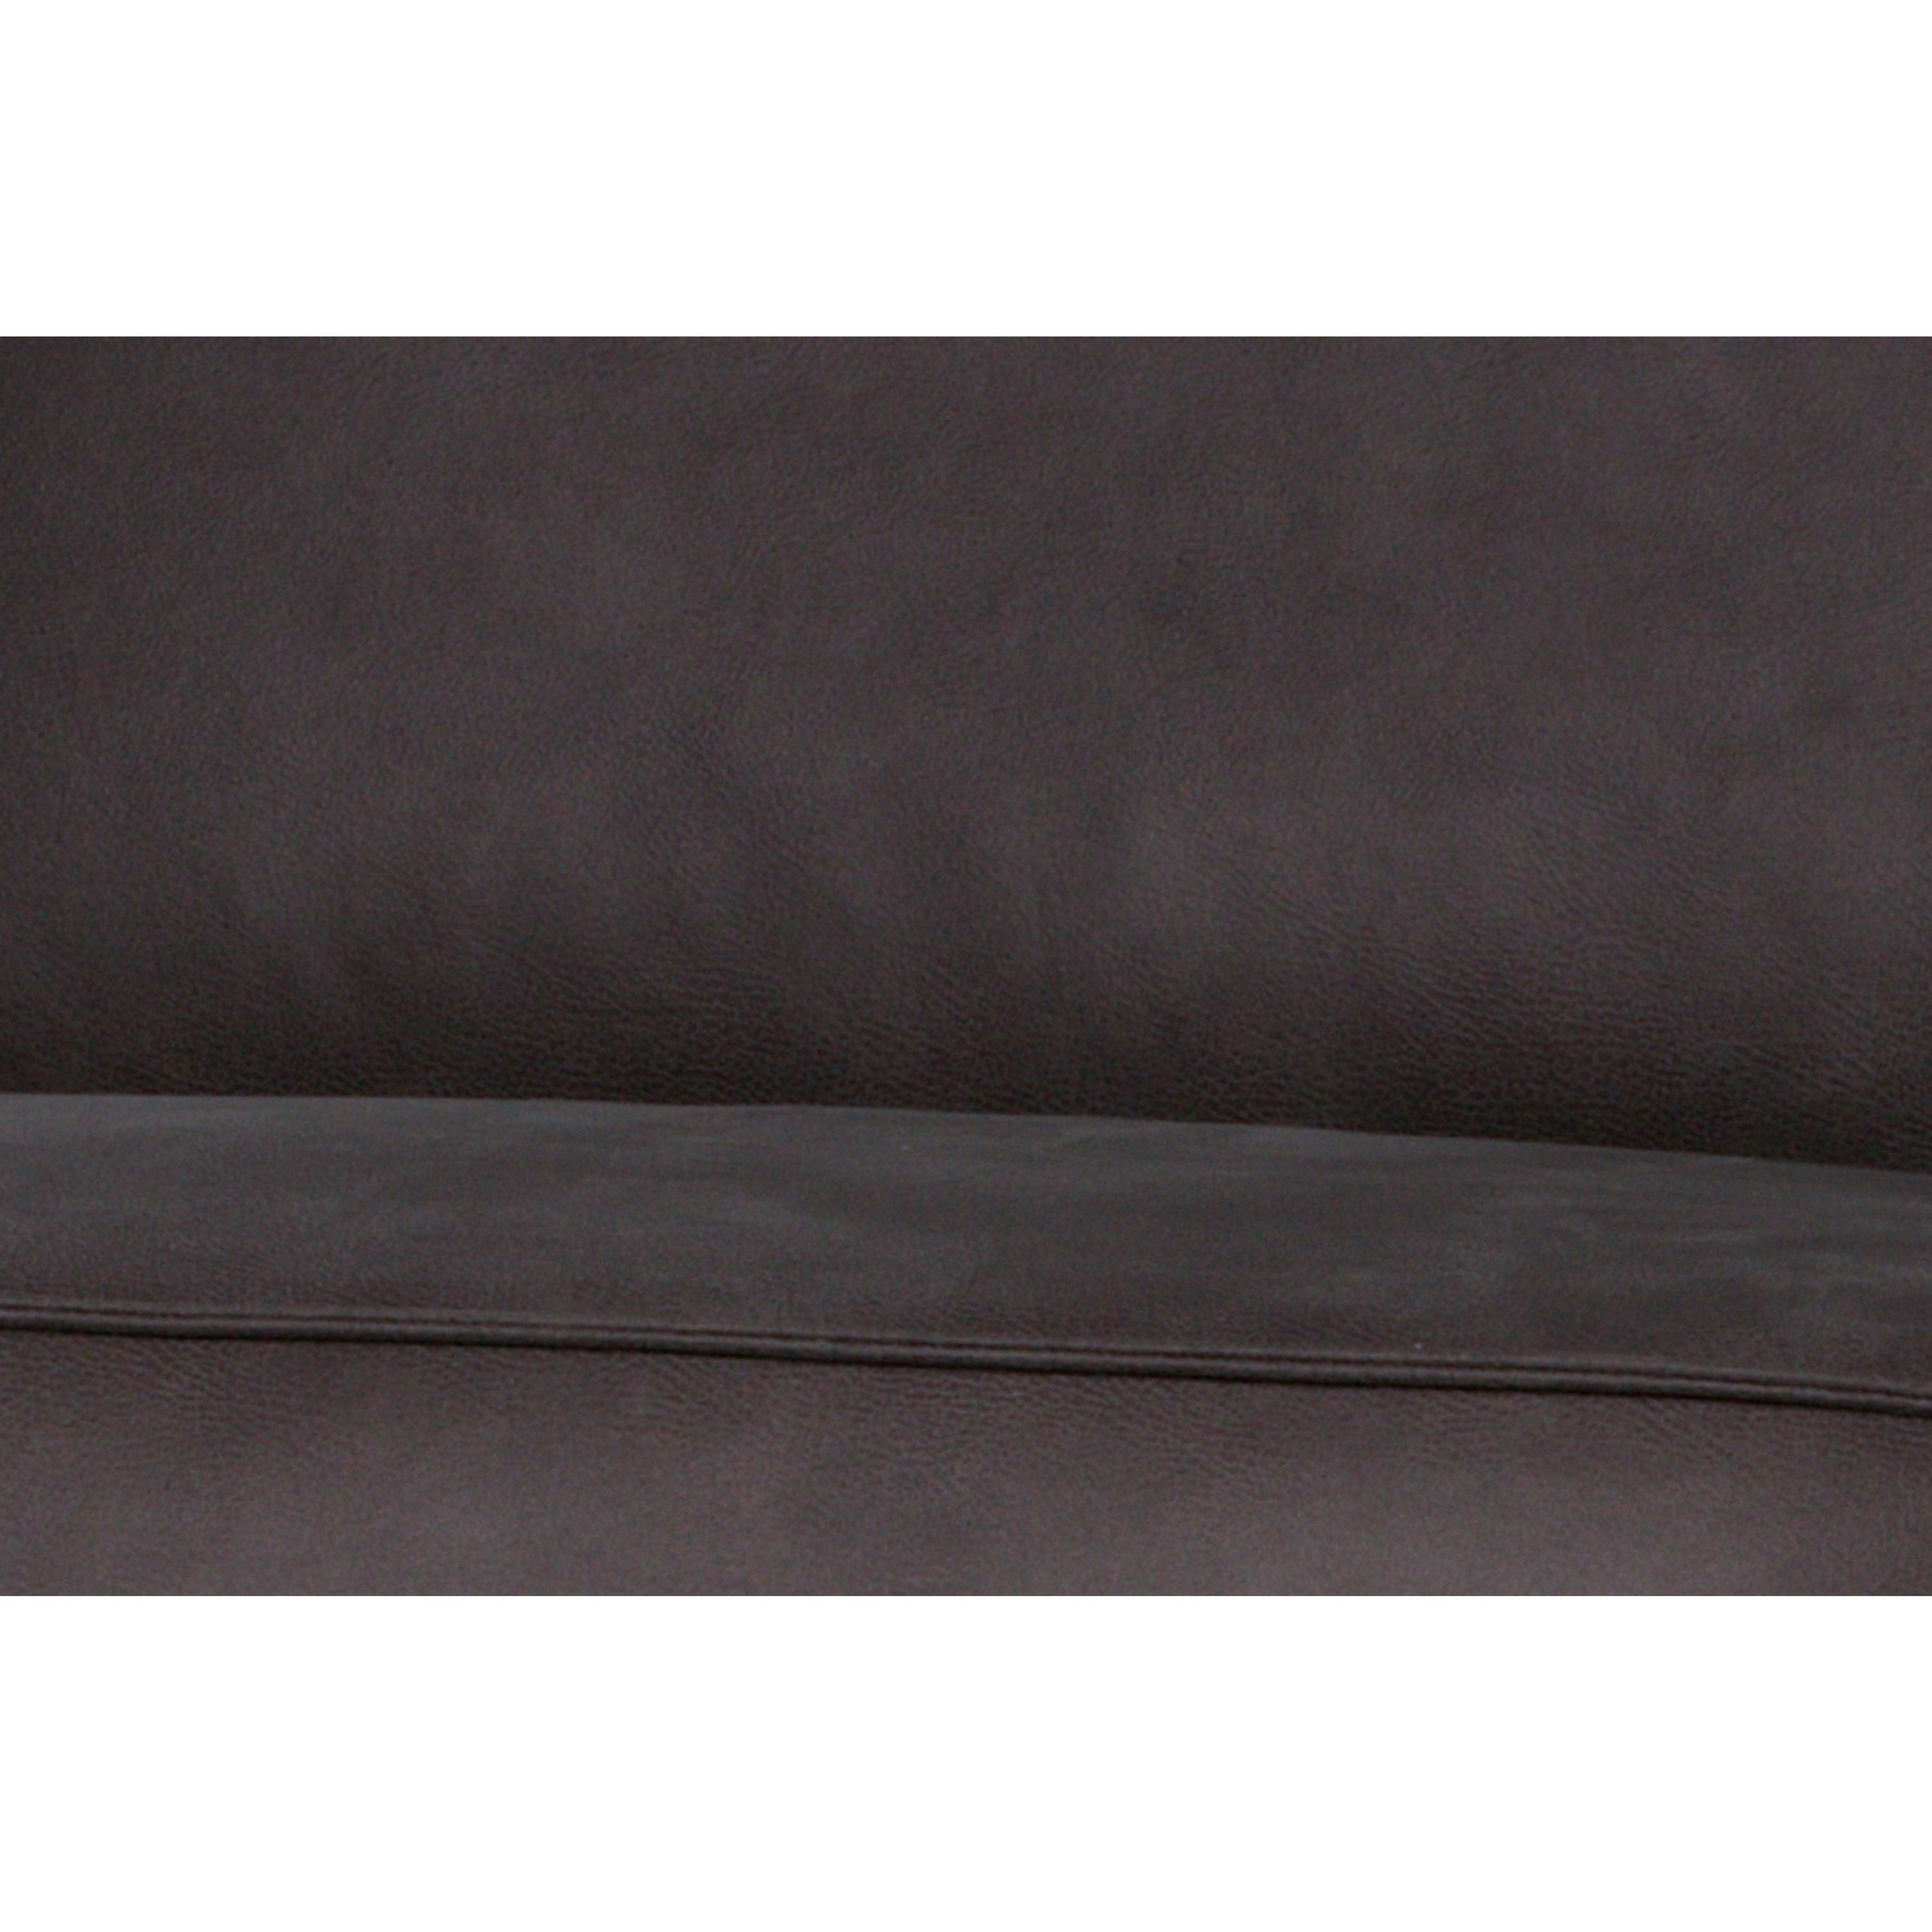 Kampinė sofa "STATEMENT", kairė pusė, pilka spalva, perdirbta oda